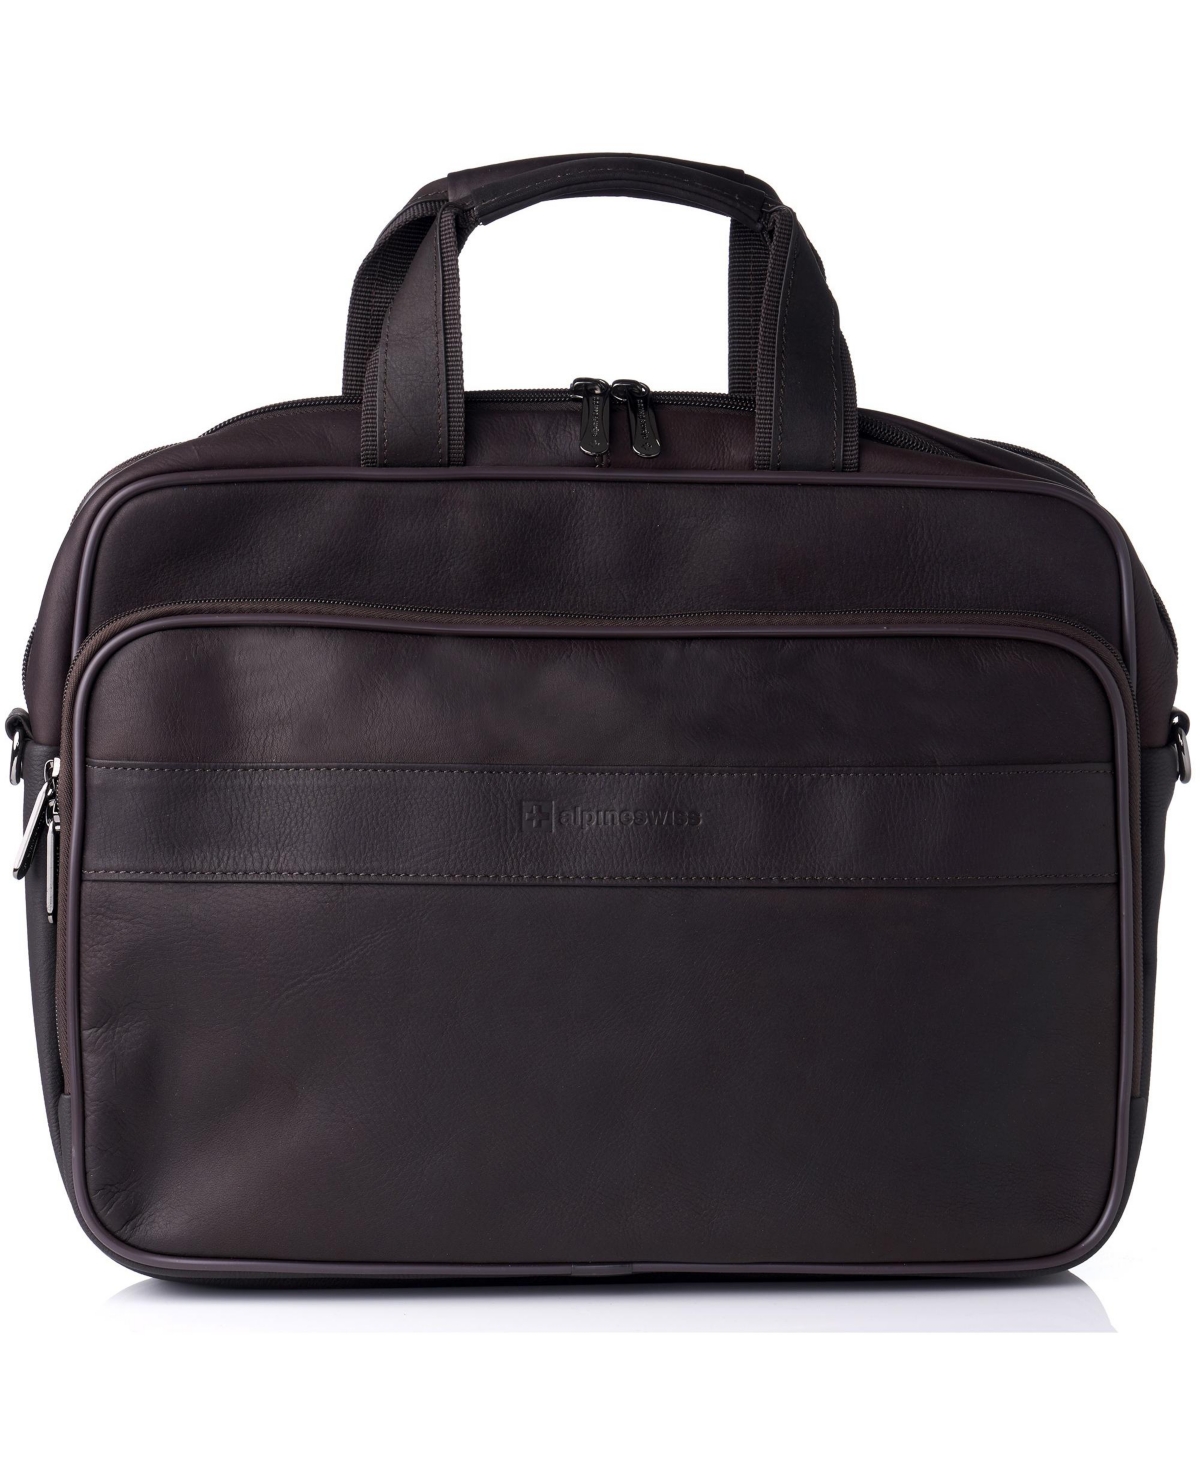 Messenger Bag Leather 15.6 Laptop Briefcase Portfolio Business Case - Brown